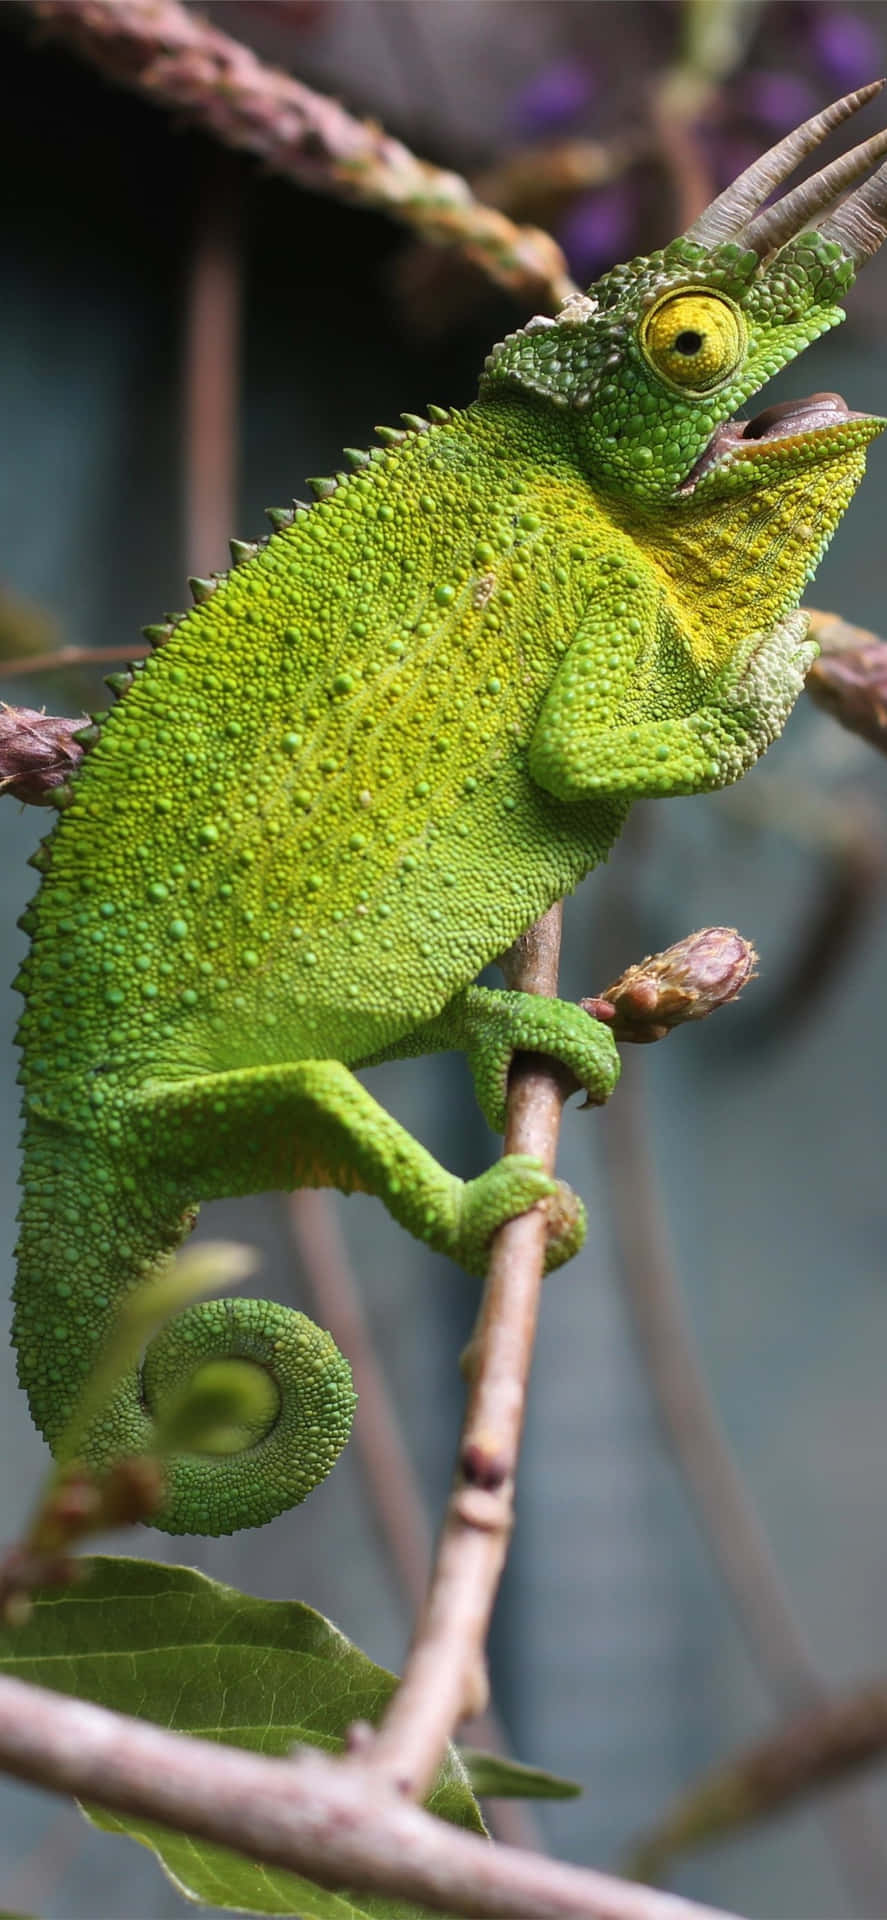 Green Iguana Lizard On Branch Picture